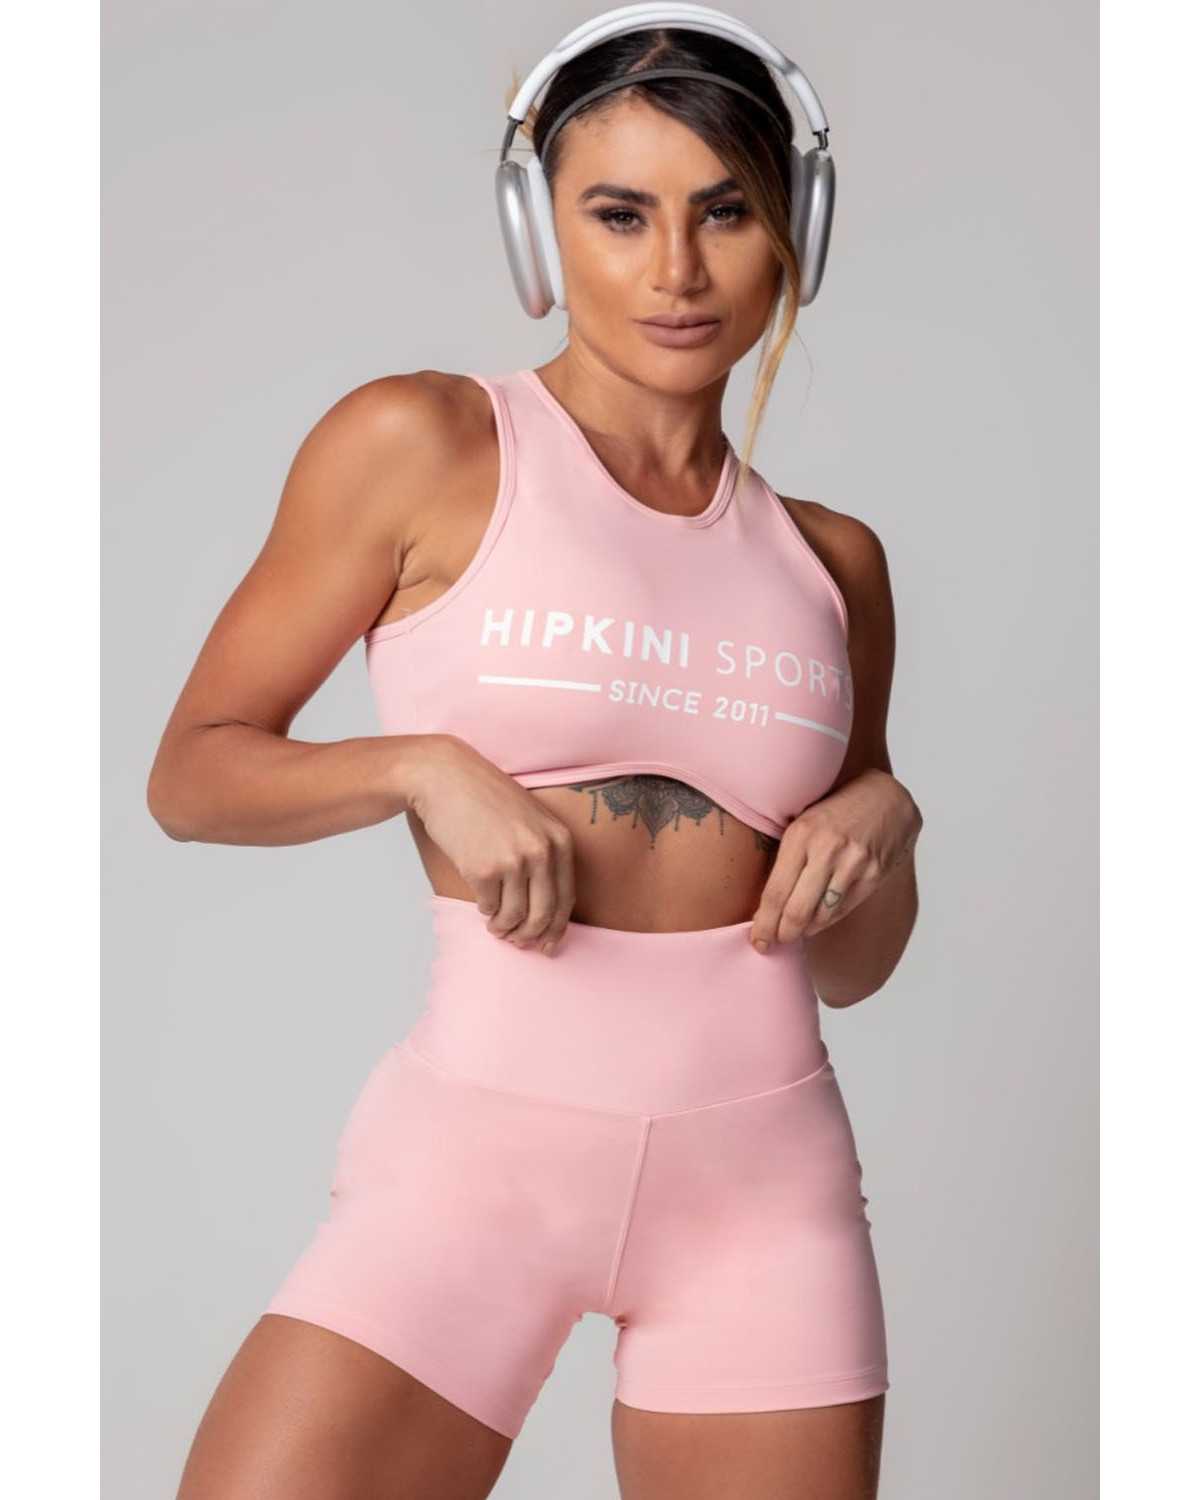 https://www.donnashape.com/125211-large_default/top-sportswear-fitness-rosa-com-silk.jpg